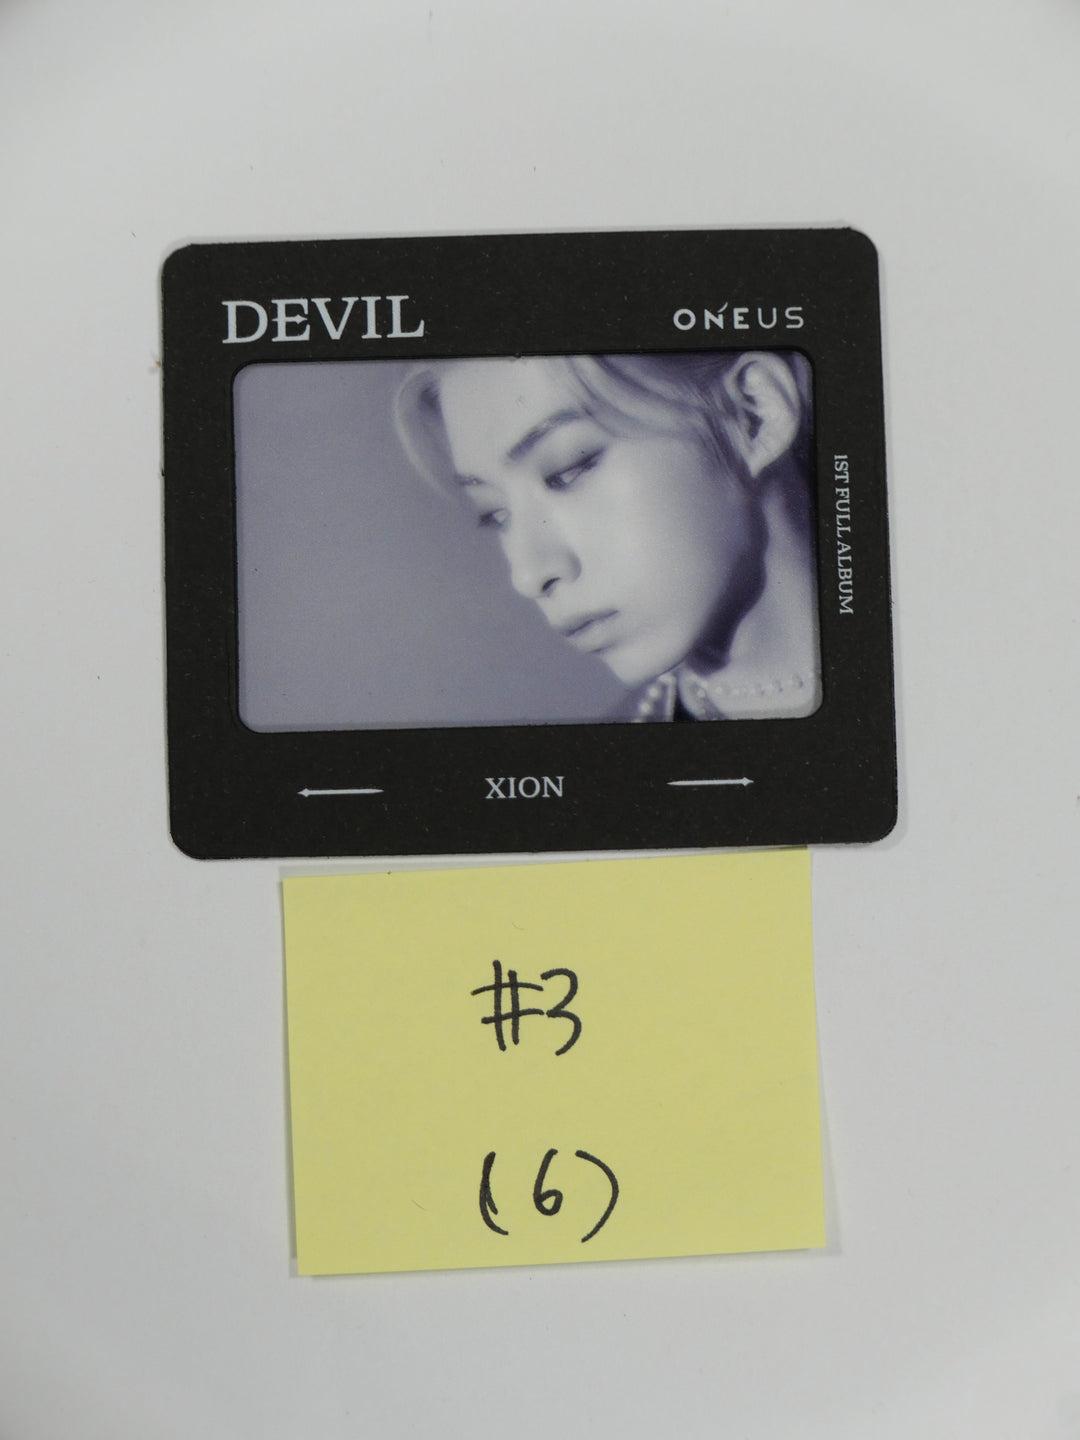 ONEUS "DEVIL" - Official Photocard